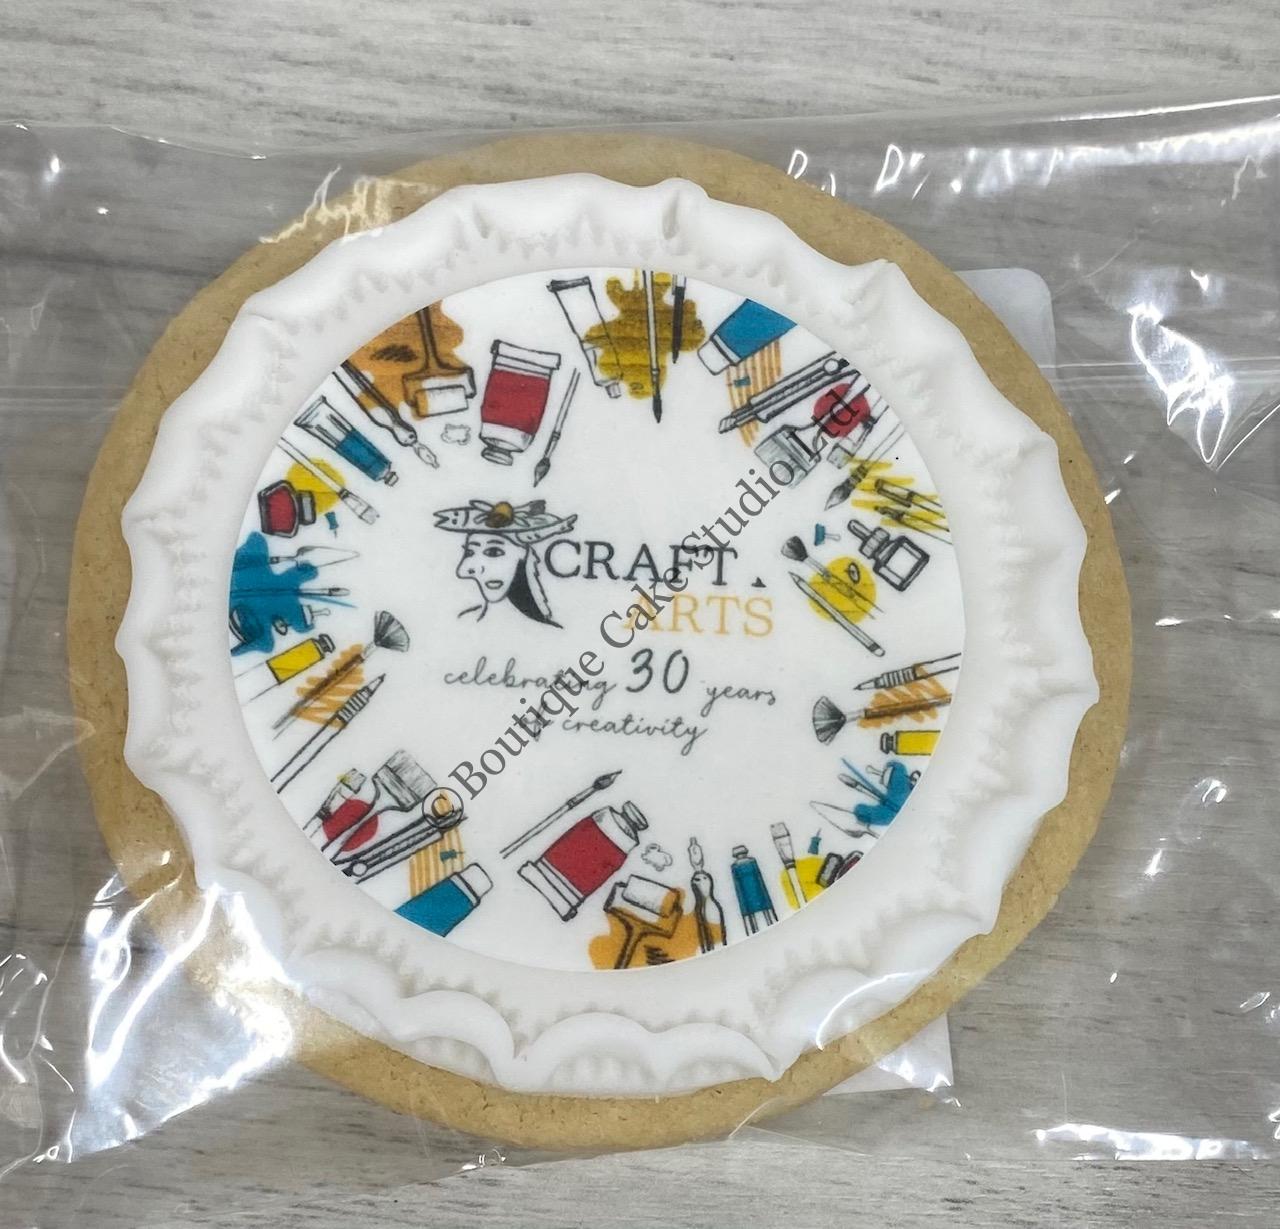 Corporate Crafty Arts Cookies